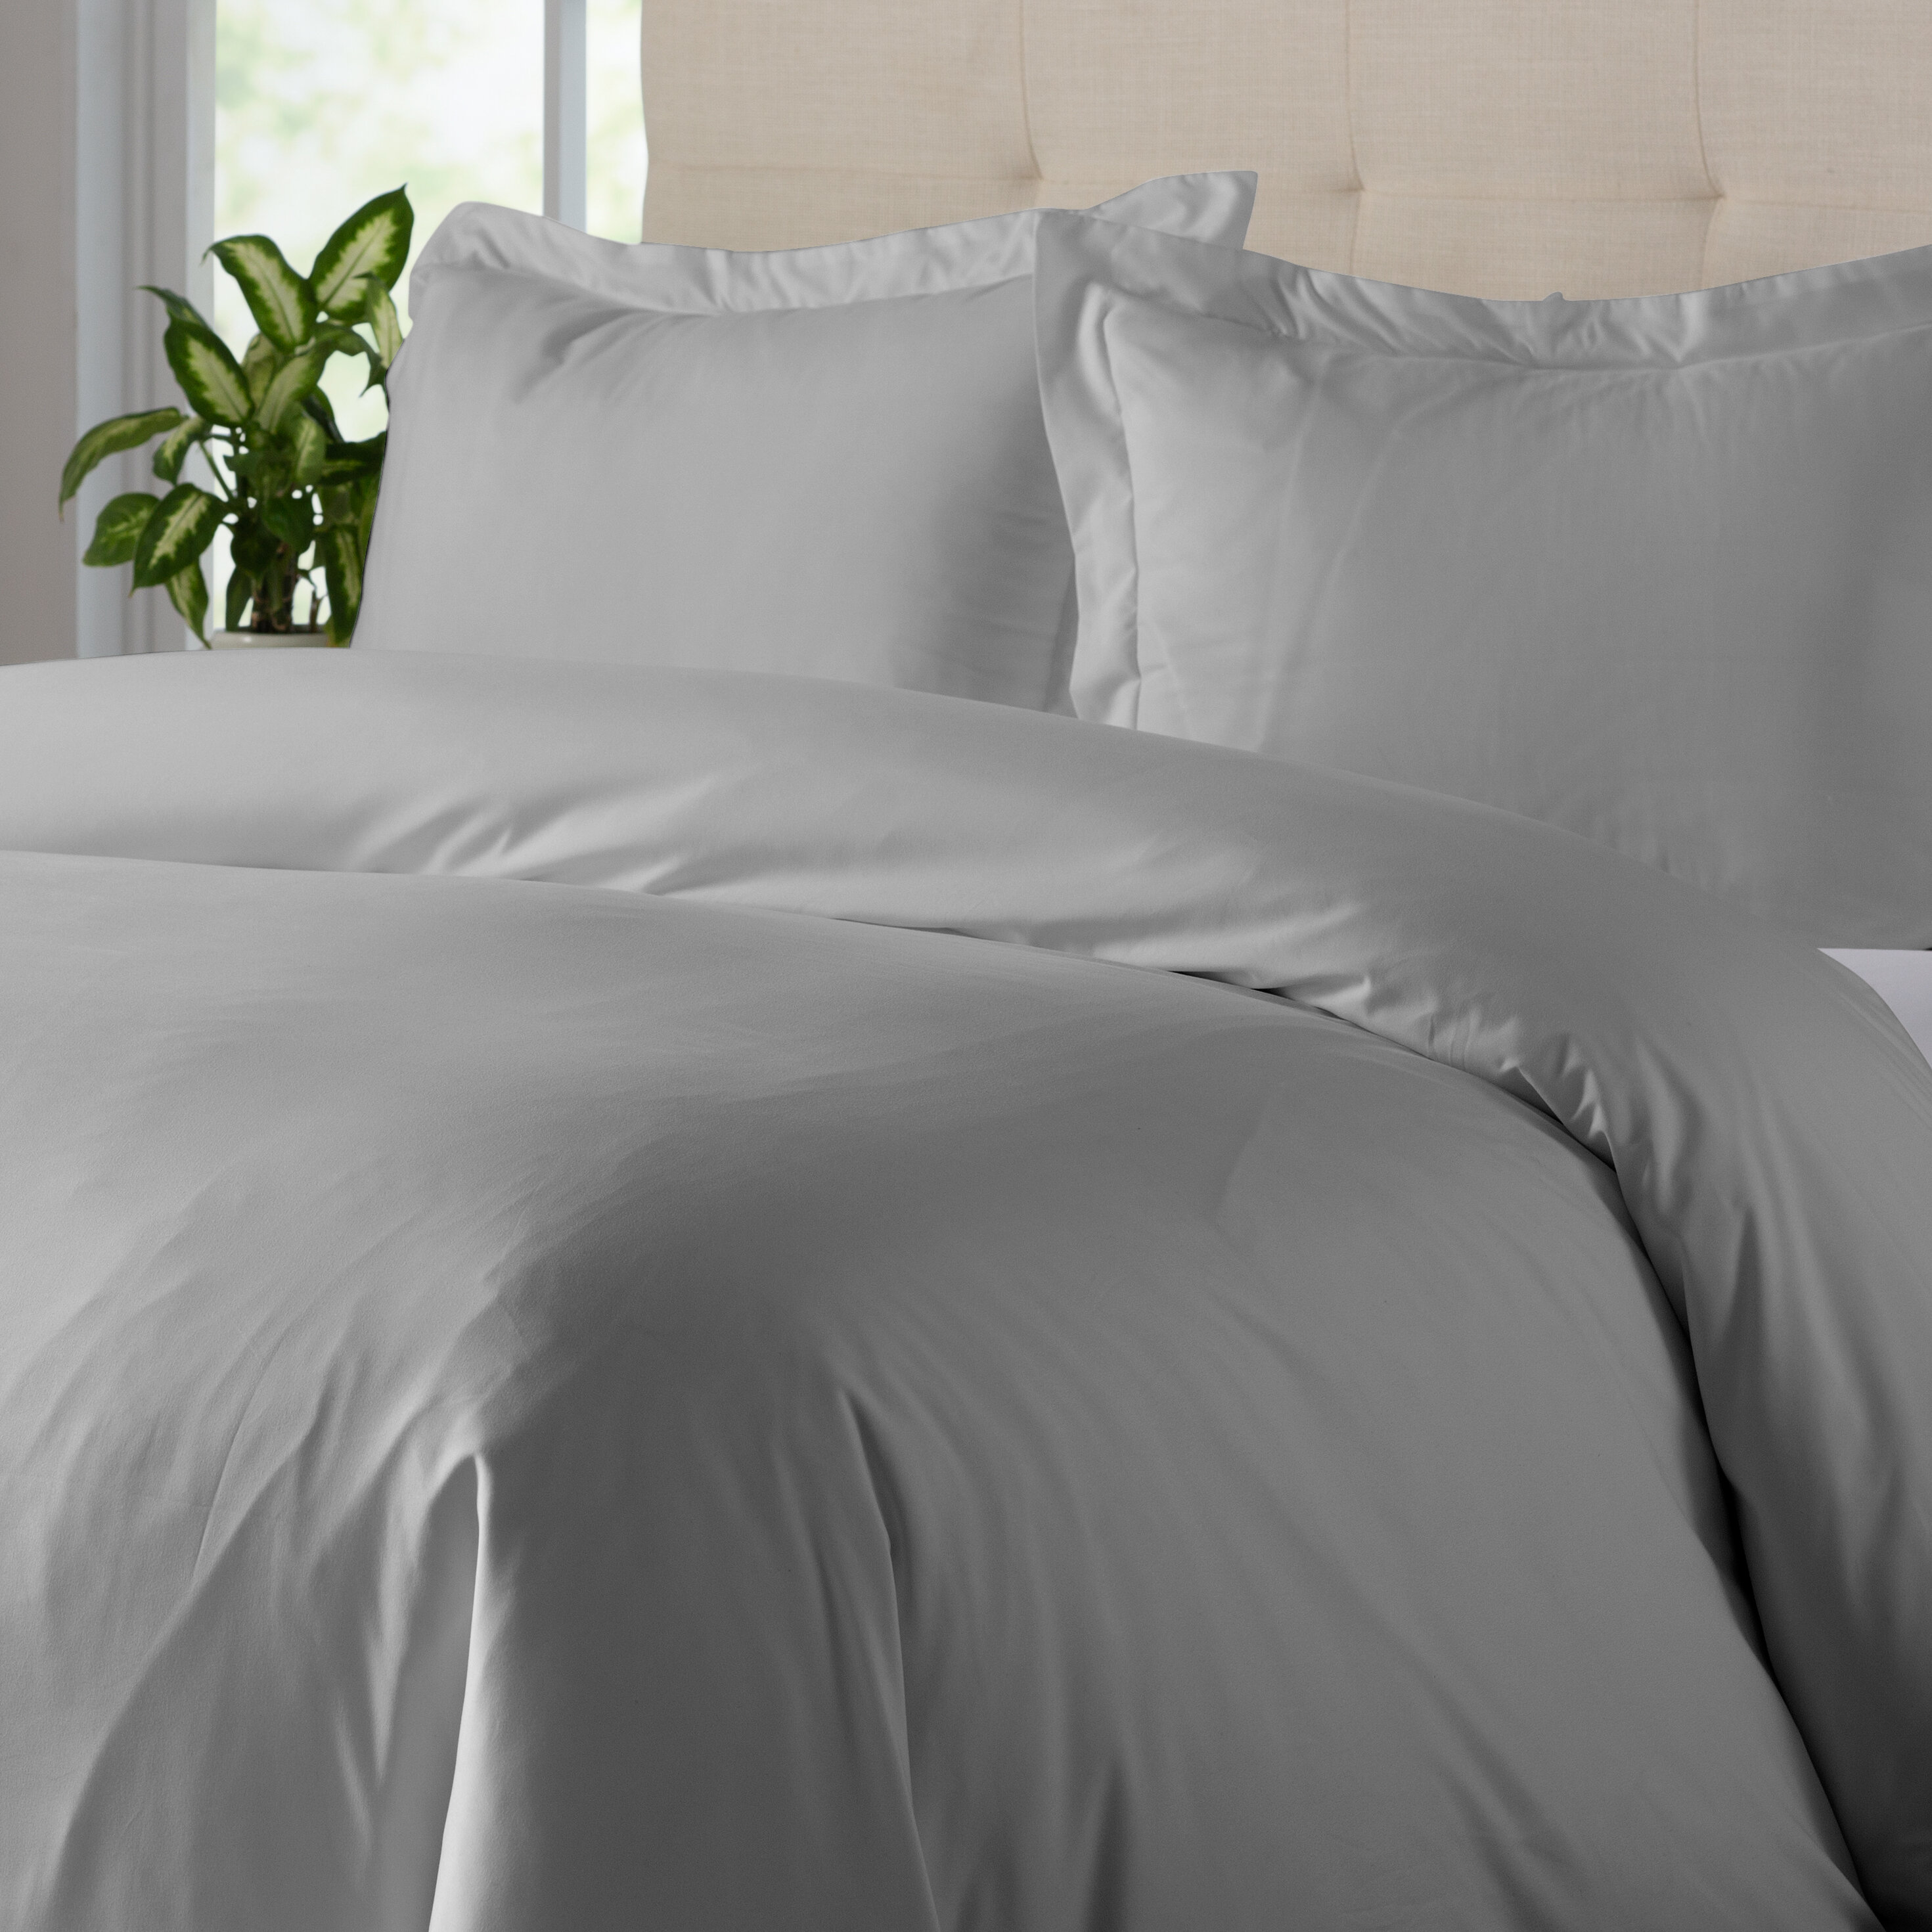 Silver Gray Bedding Sets Free Shipping Over 35 Wayfair